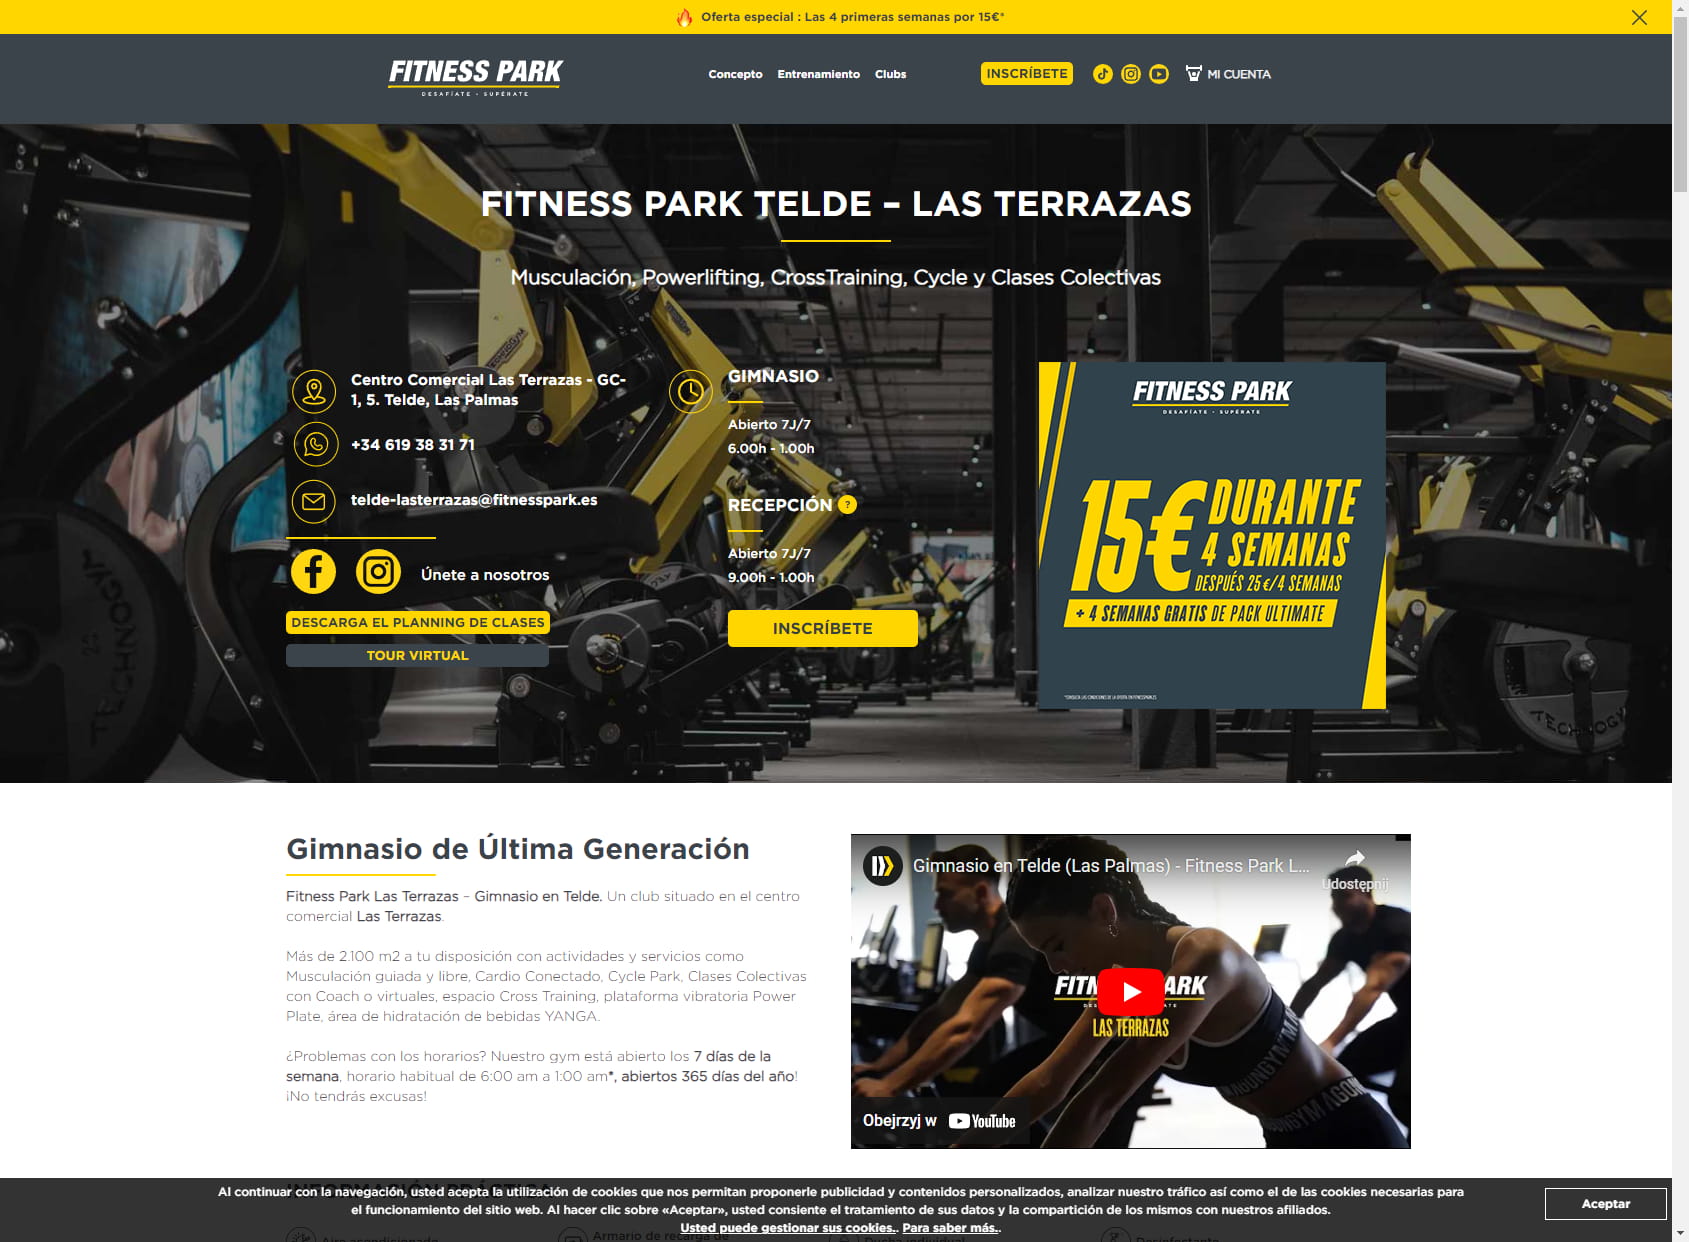 Fitness Park Telde - Las Terrazas